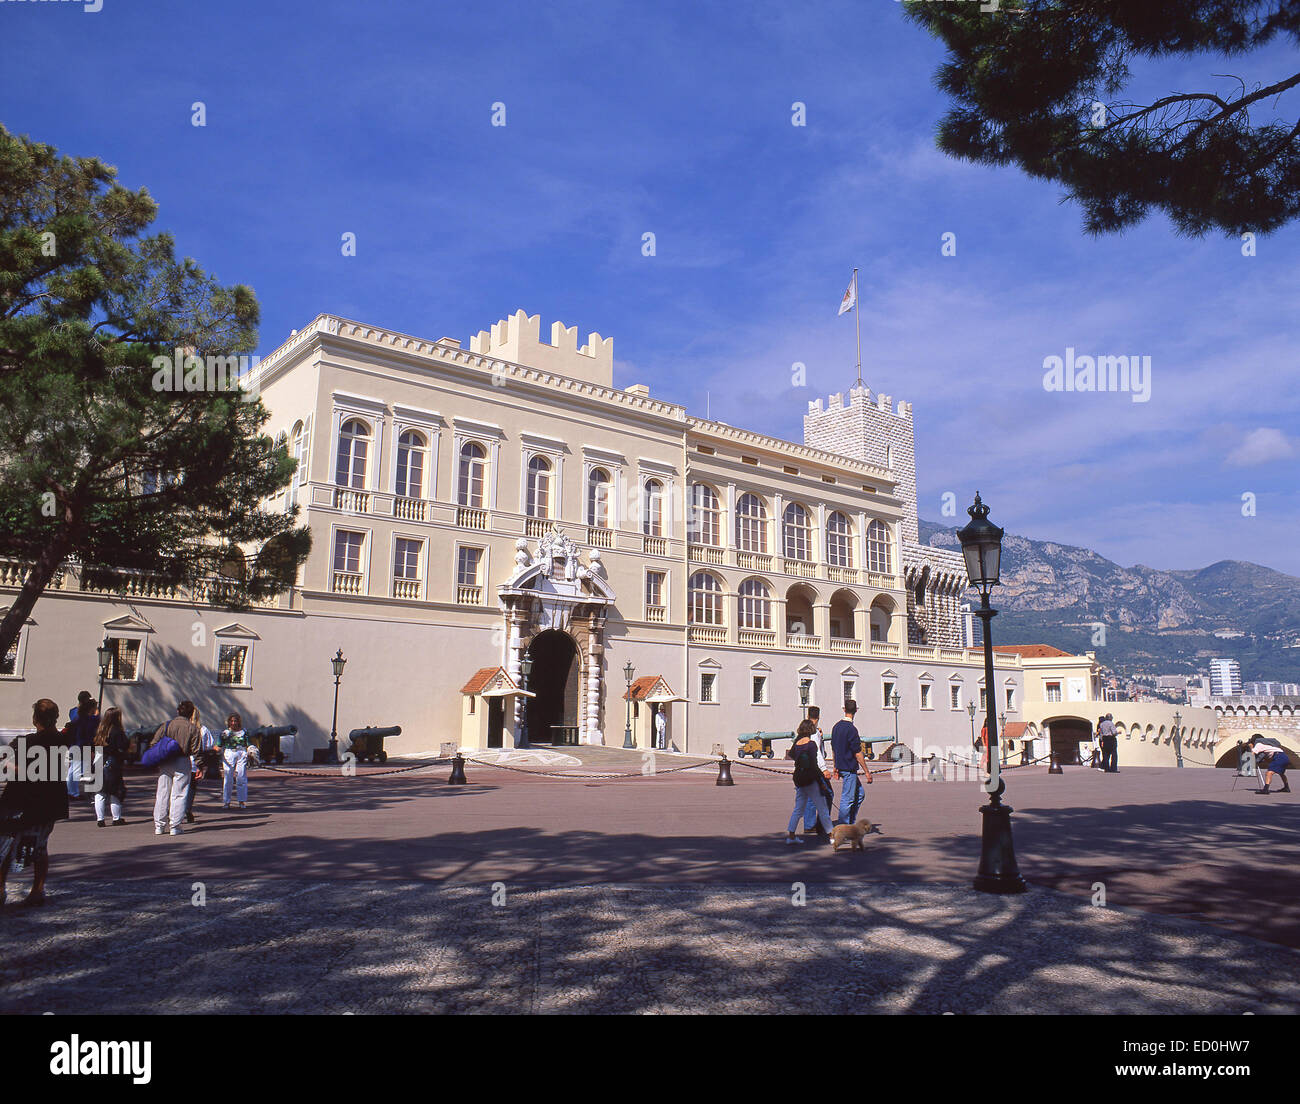 Palais Princier de Monaco, Place du Palais, Monaco-Ville, Principality of Monaco Stock Photo